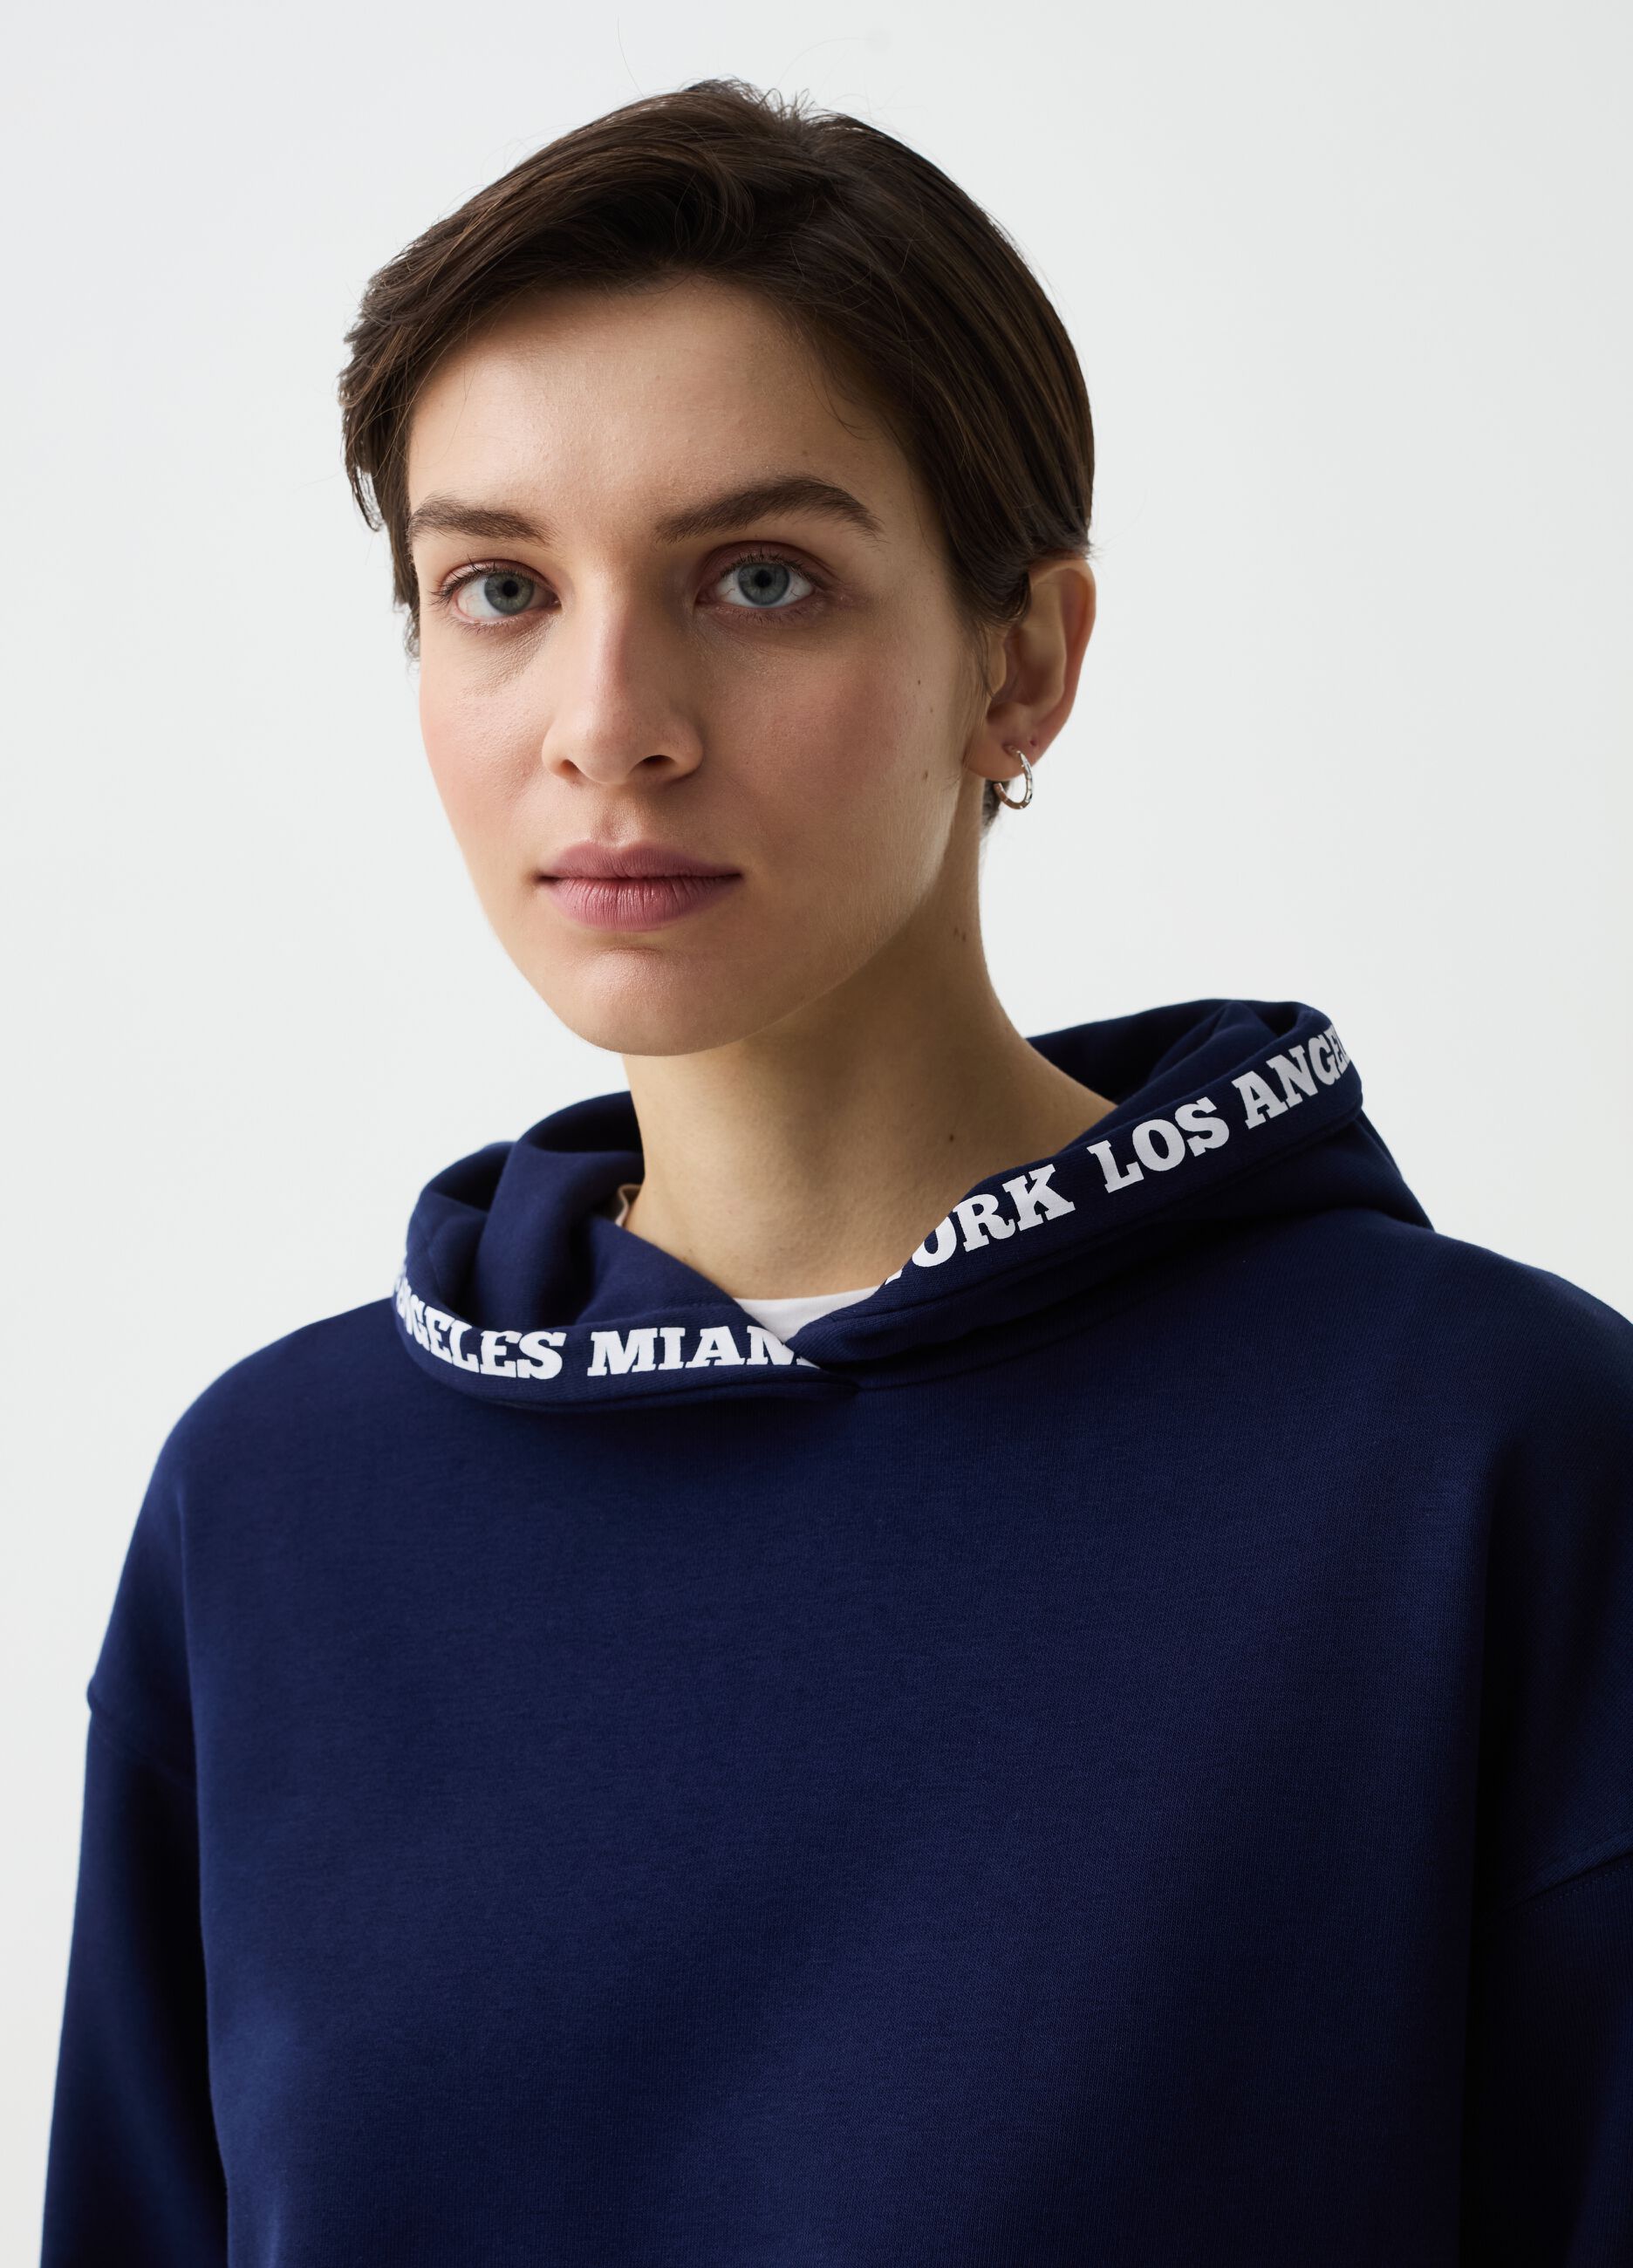 Essential sweatshirt with hood and print